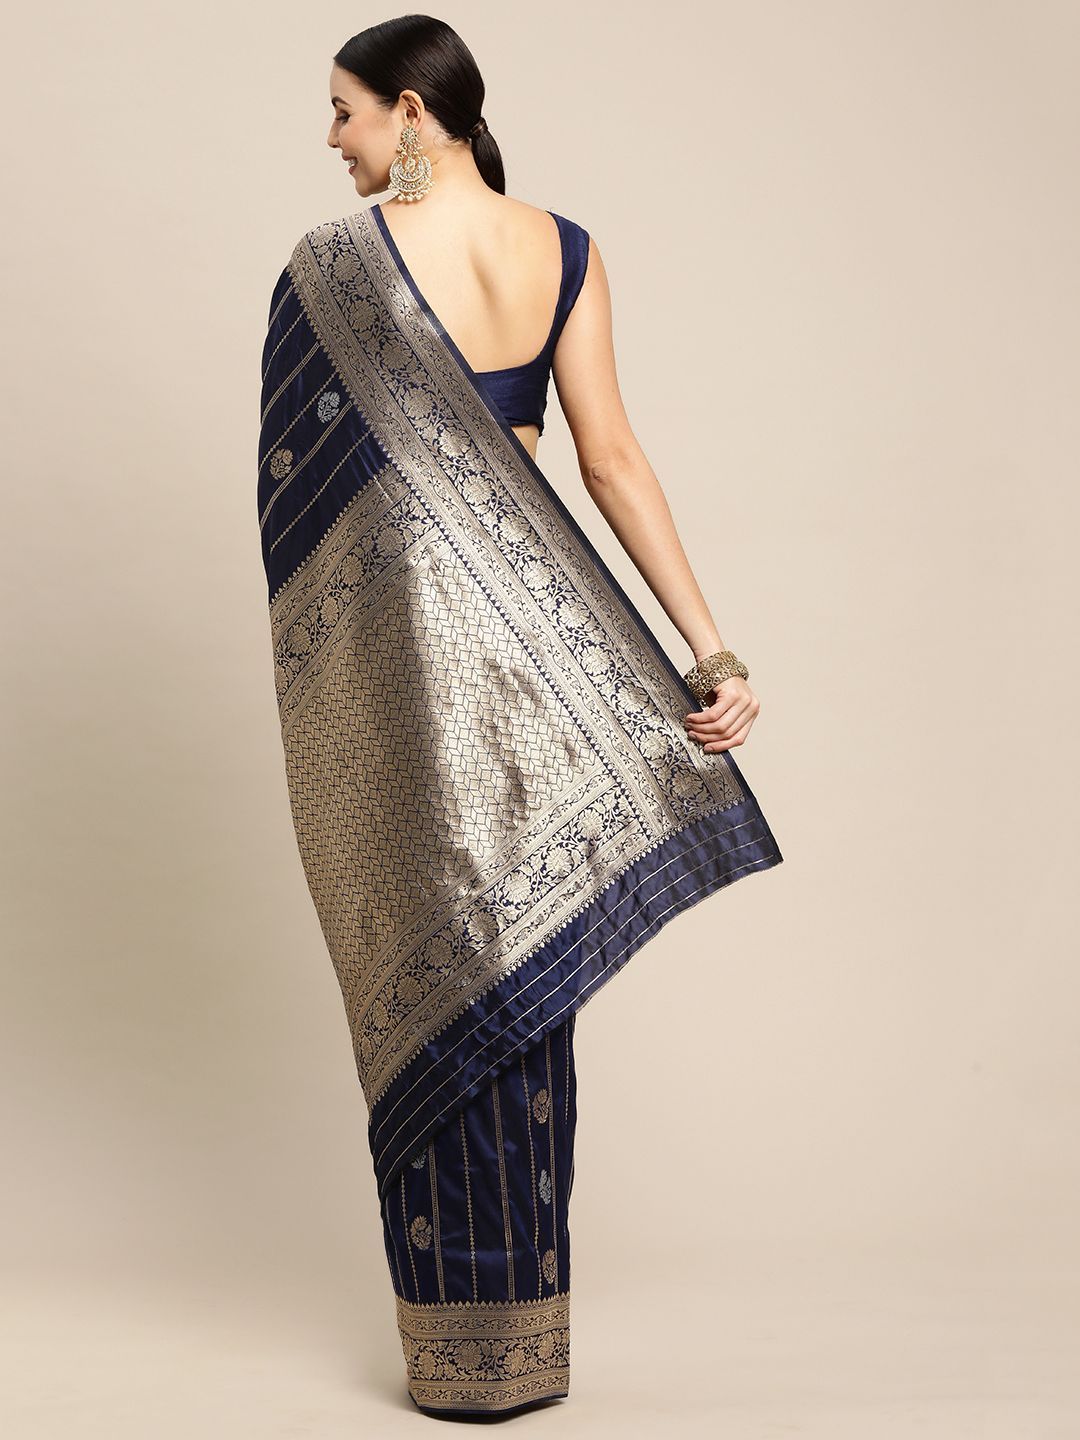 Navy blue Color Bollywood Banarasi Silk Saree and Silver and Gold Zari Weaving Work - Indian Wedding Collection